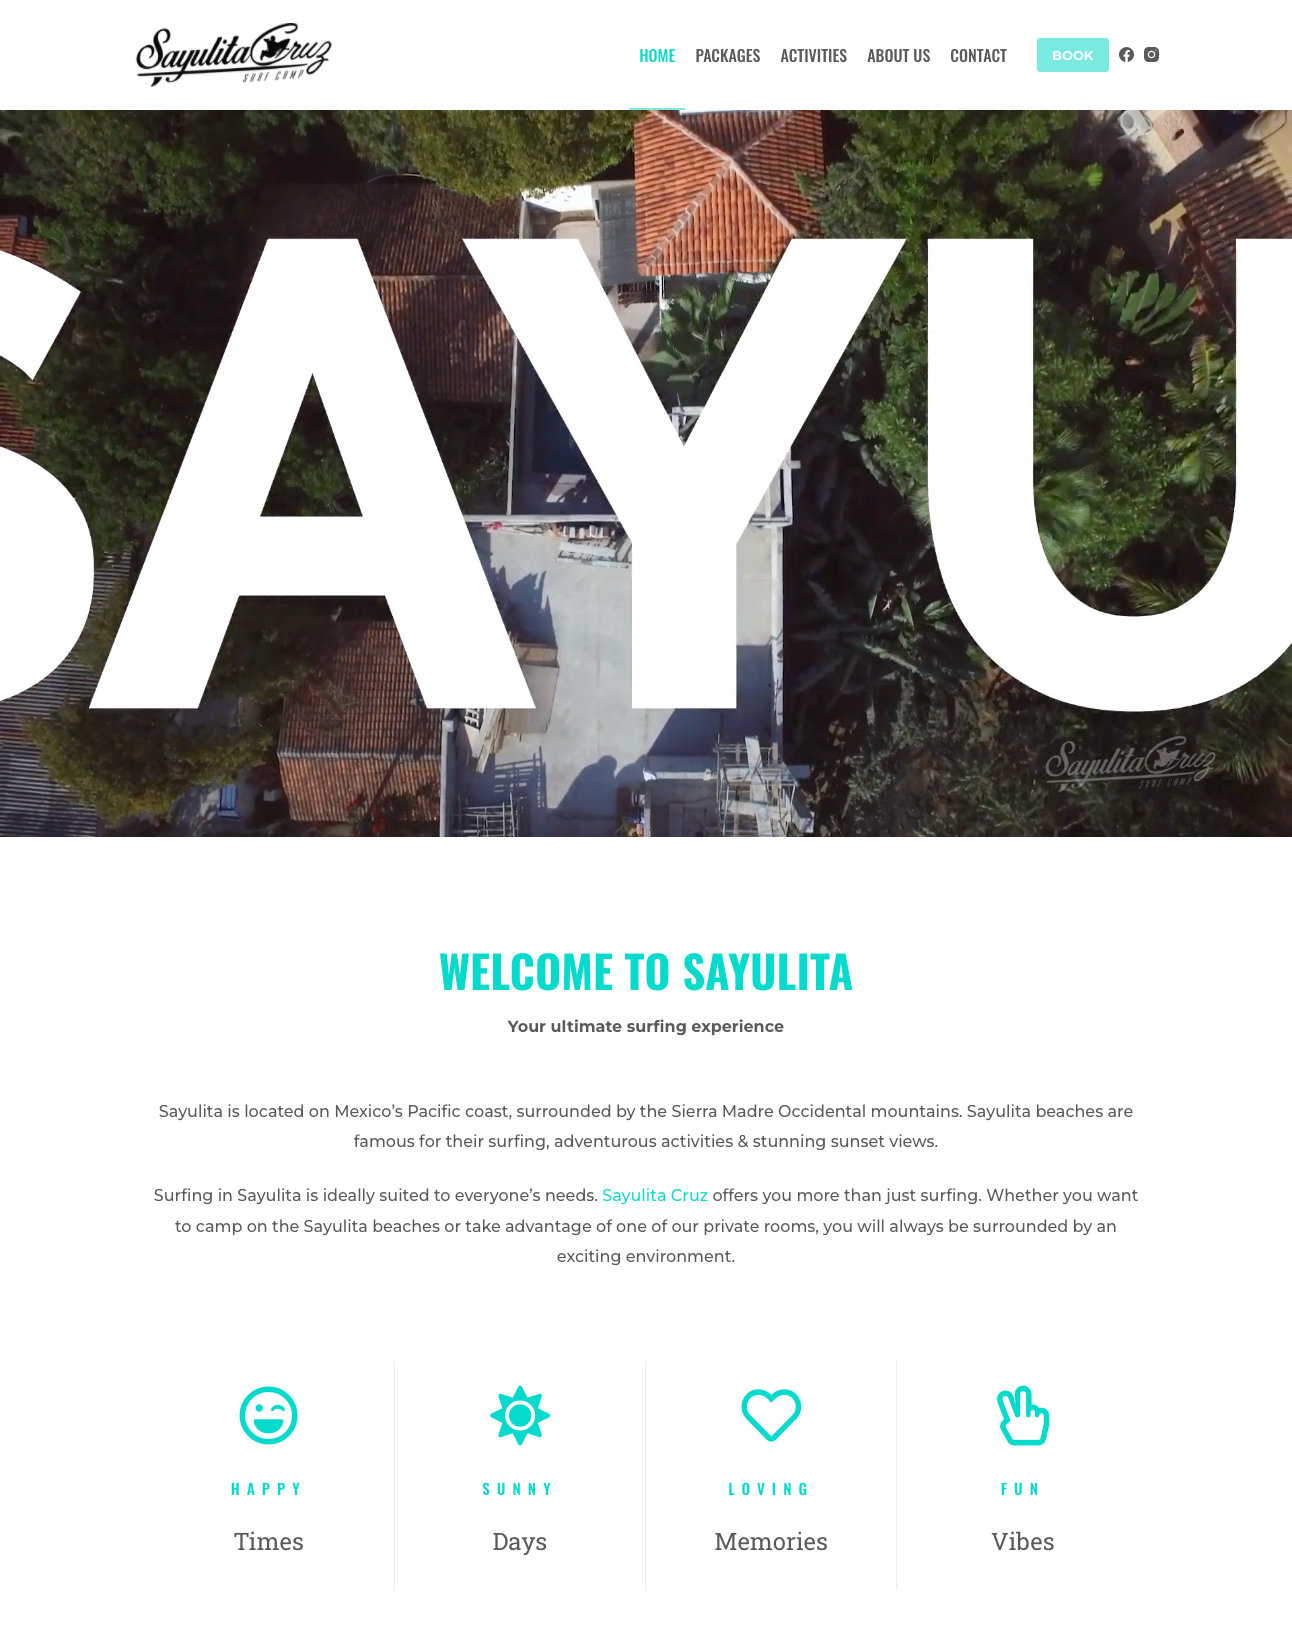 Sayulita surf camp website welcome page